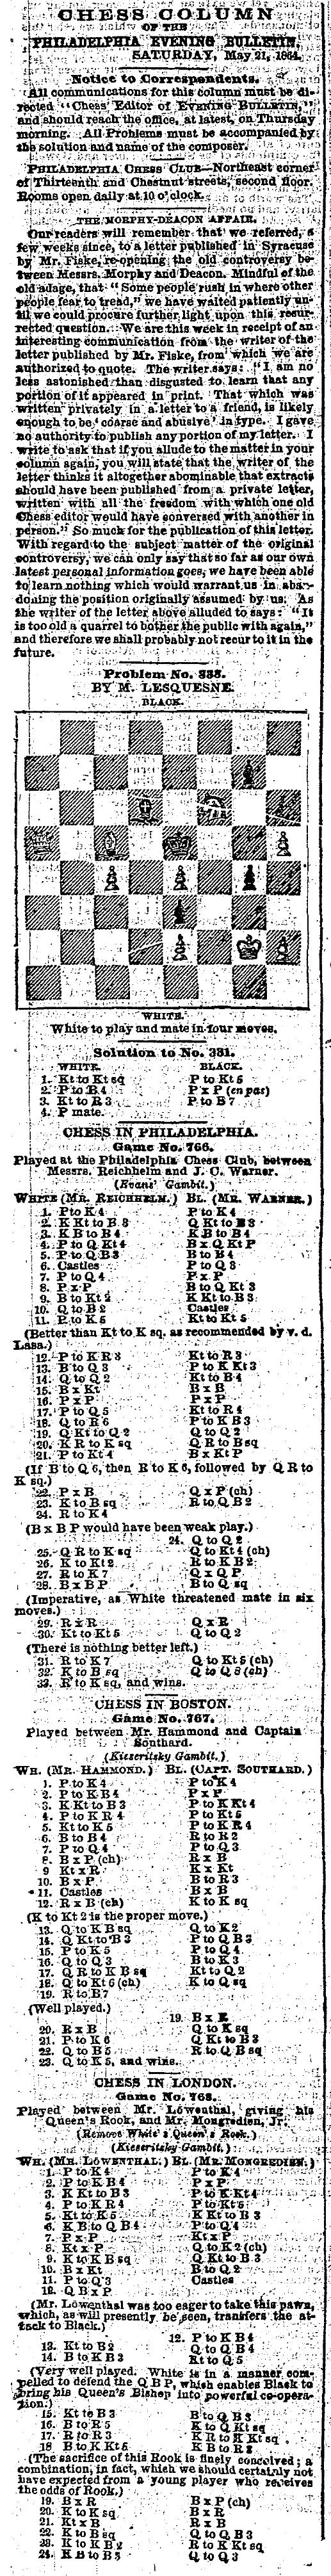 1864.05.21-01 Philadelphia Daily Evening Bulletin.jpg